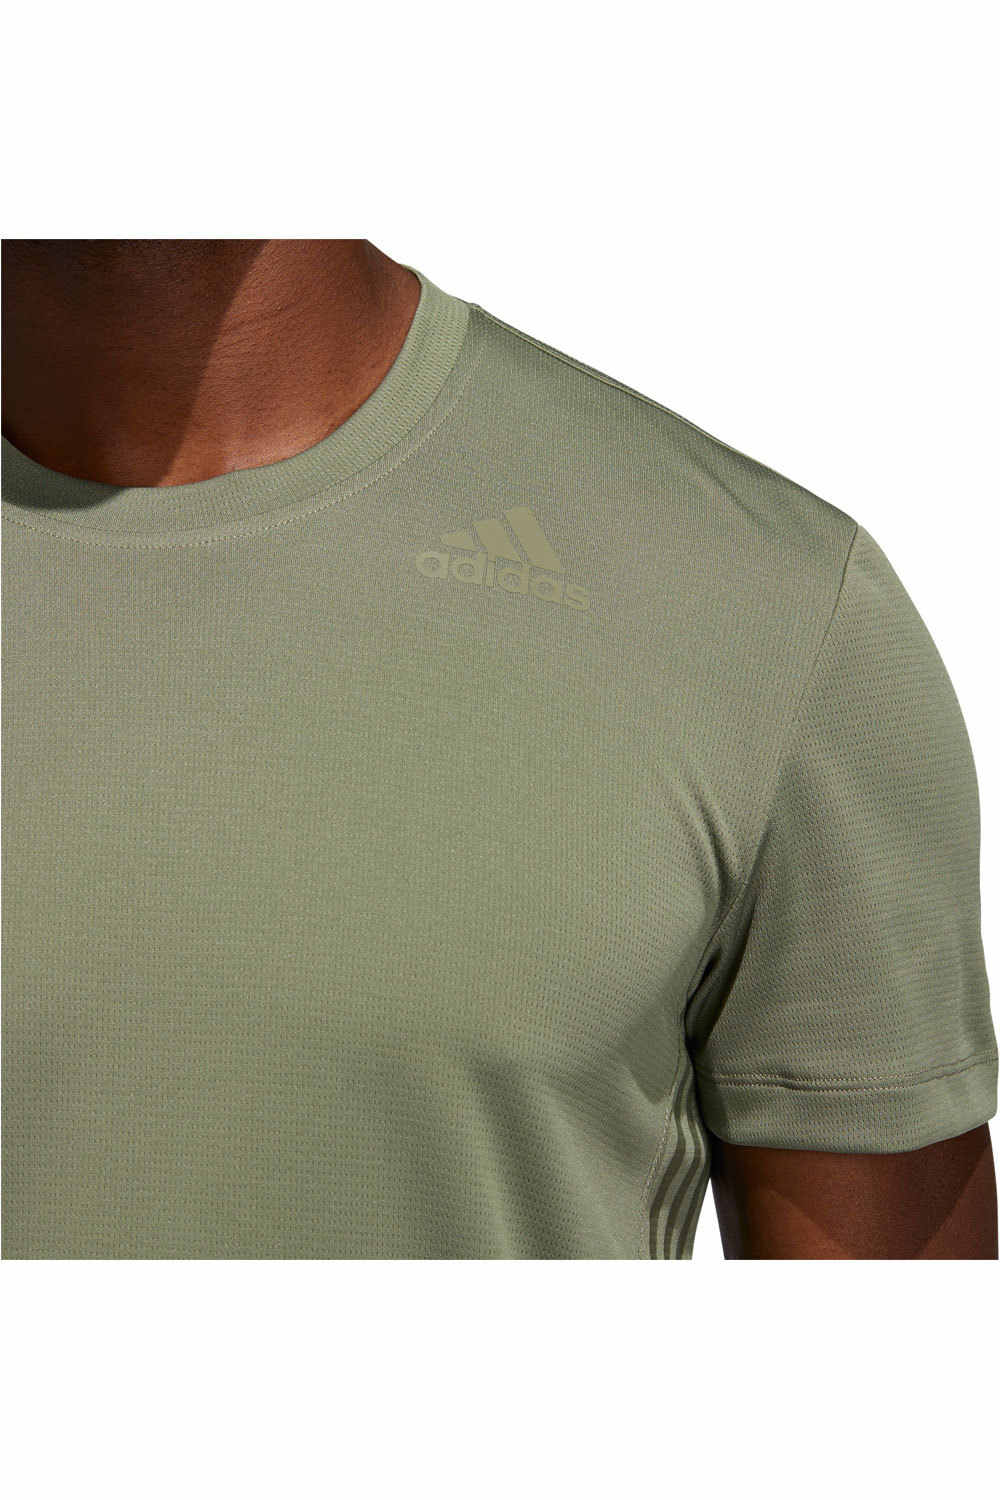 adidas camiseta fitness hombre AERO 3S TEE vista detalle